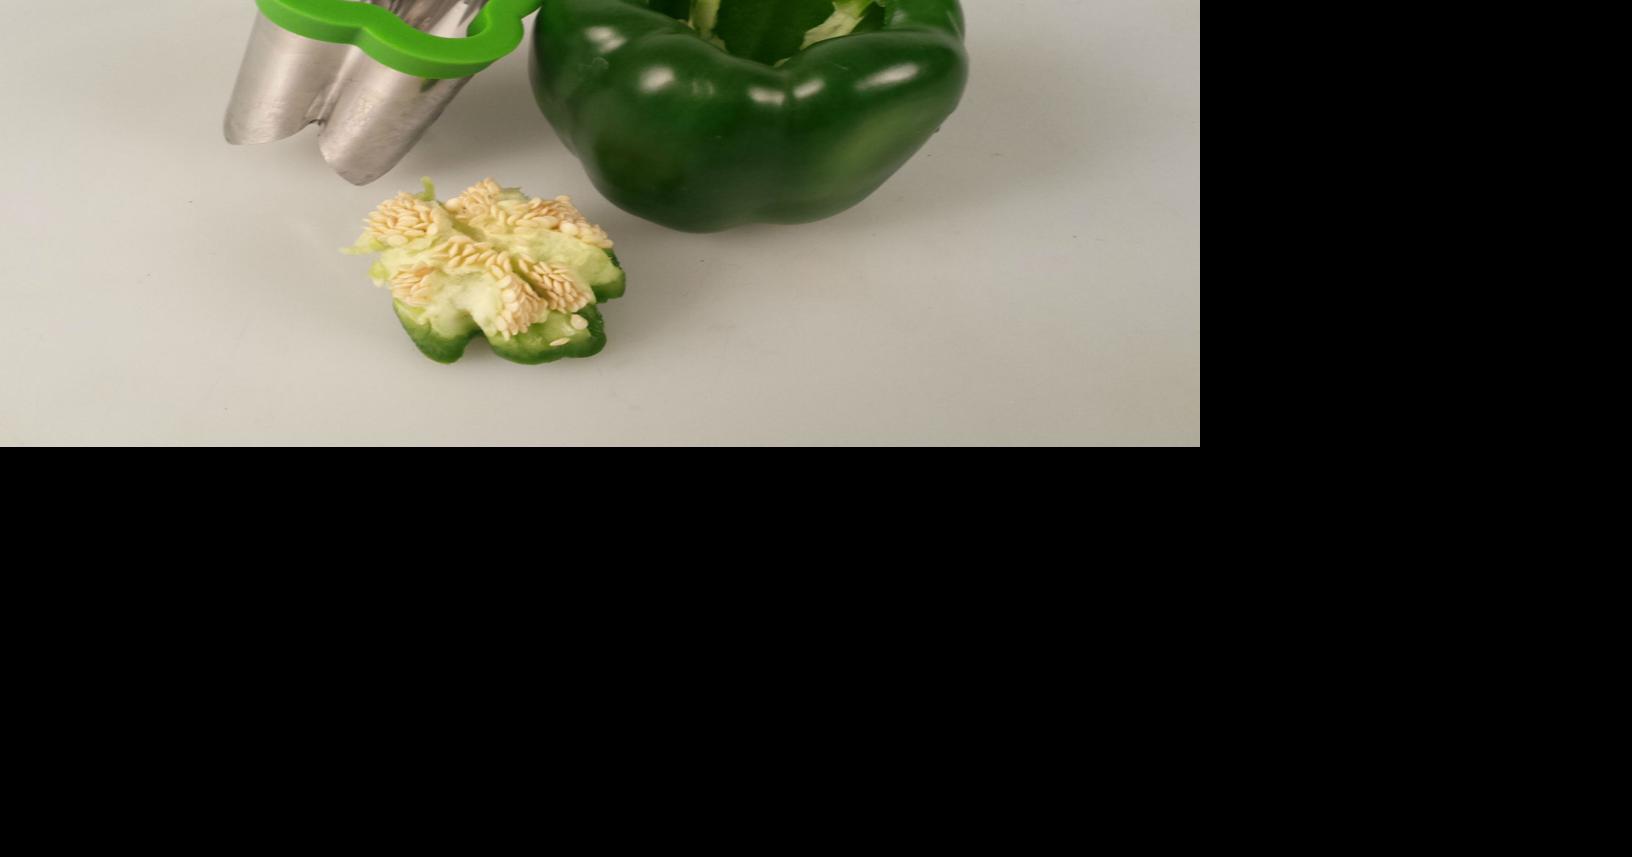 unique kitchen gadgets avocado peeler skinner